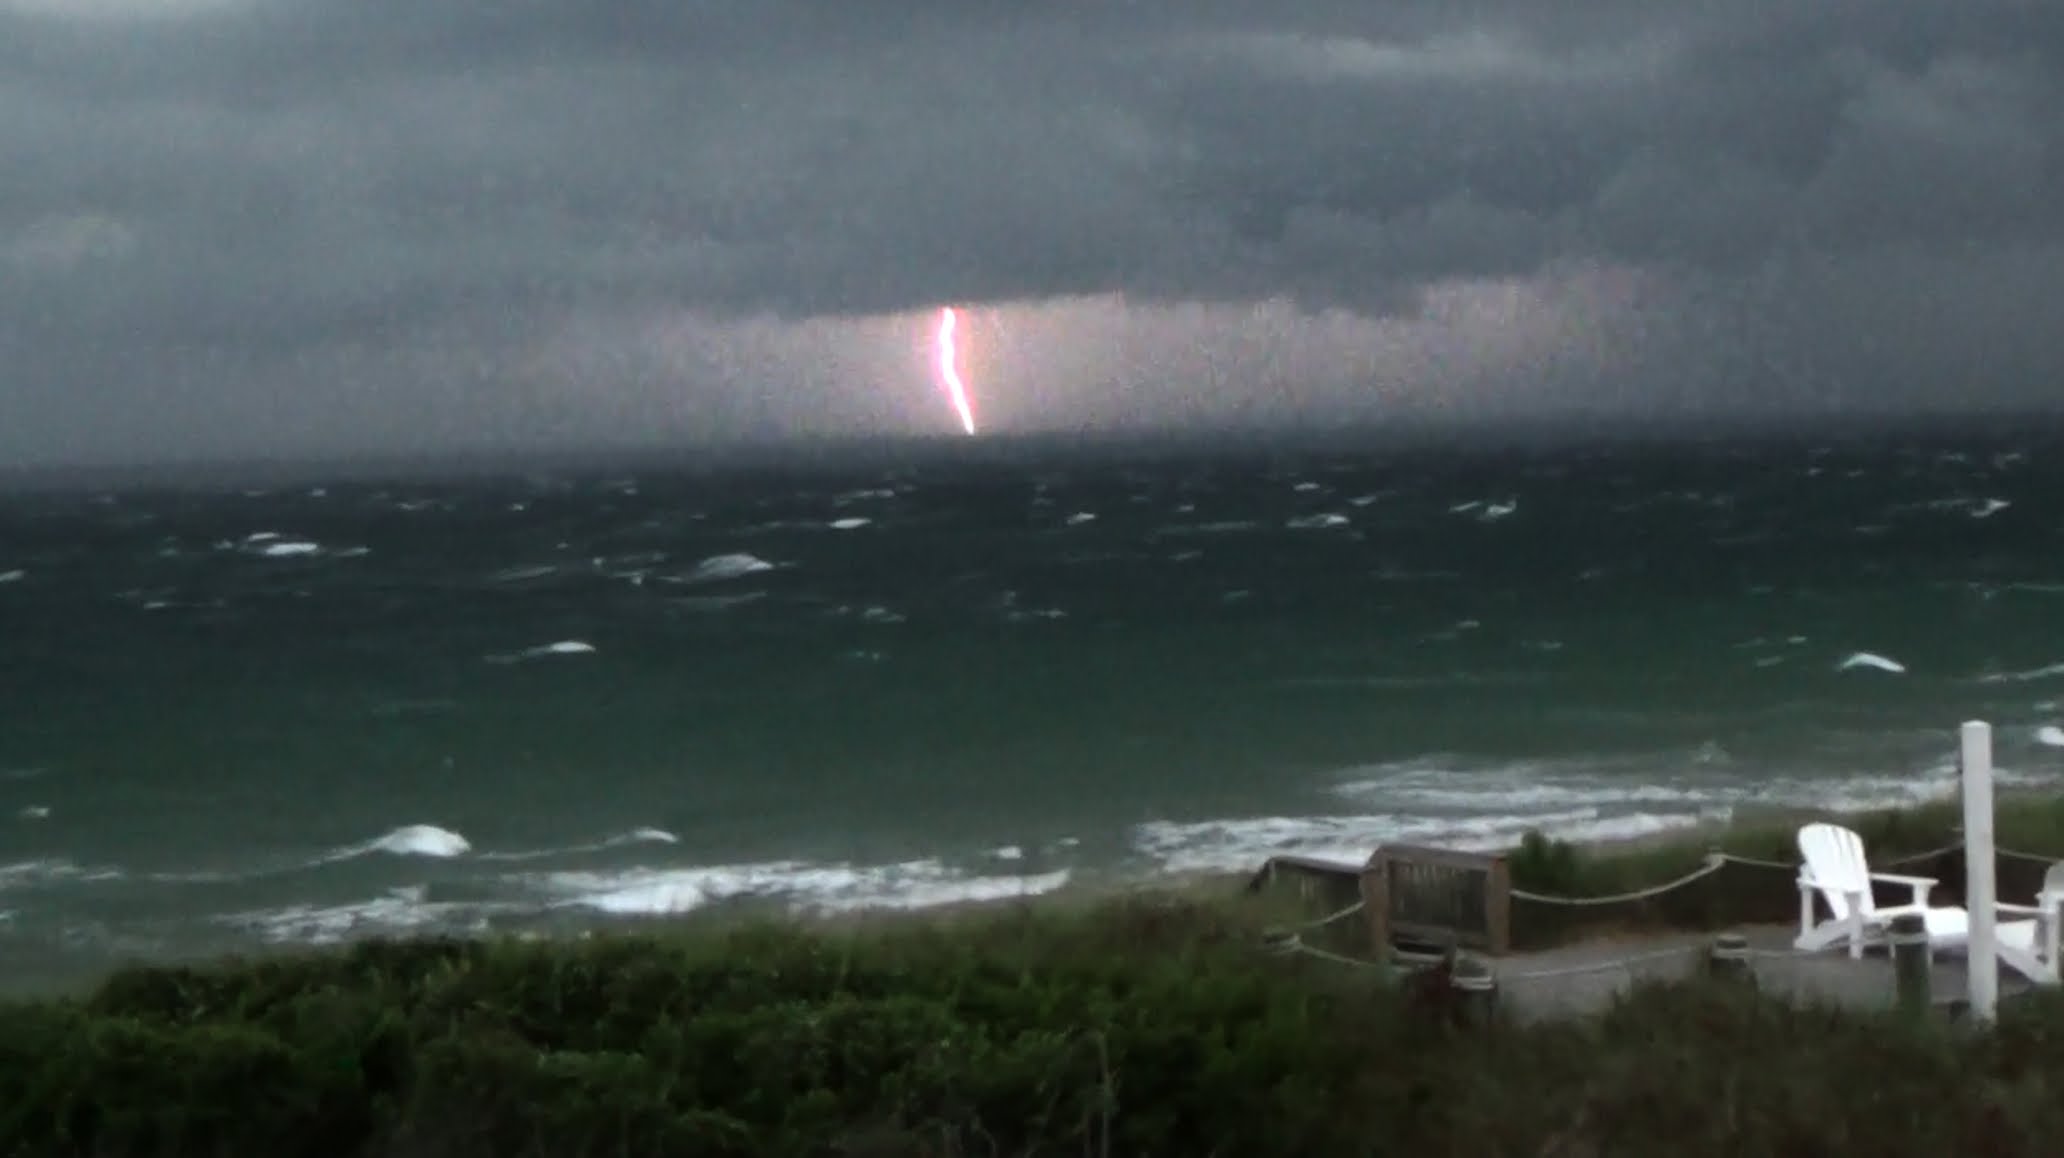 Outer banks lightning photo